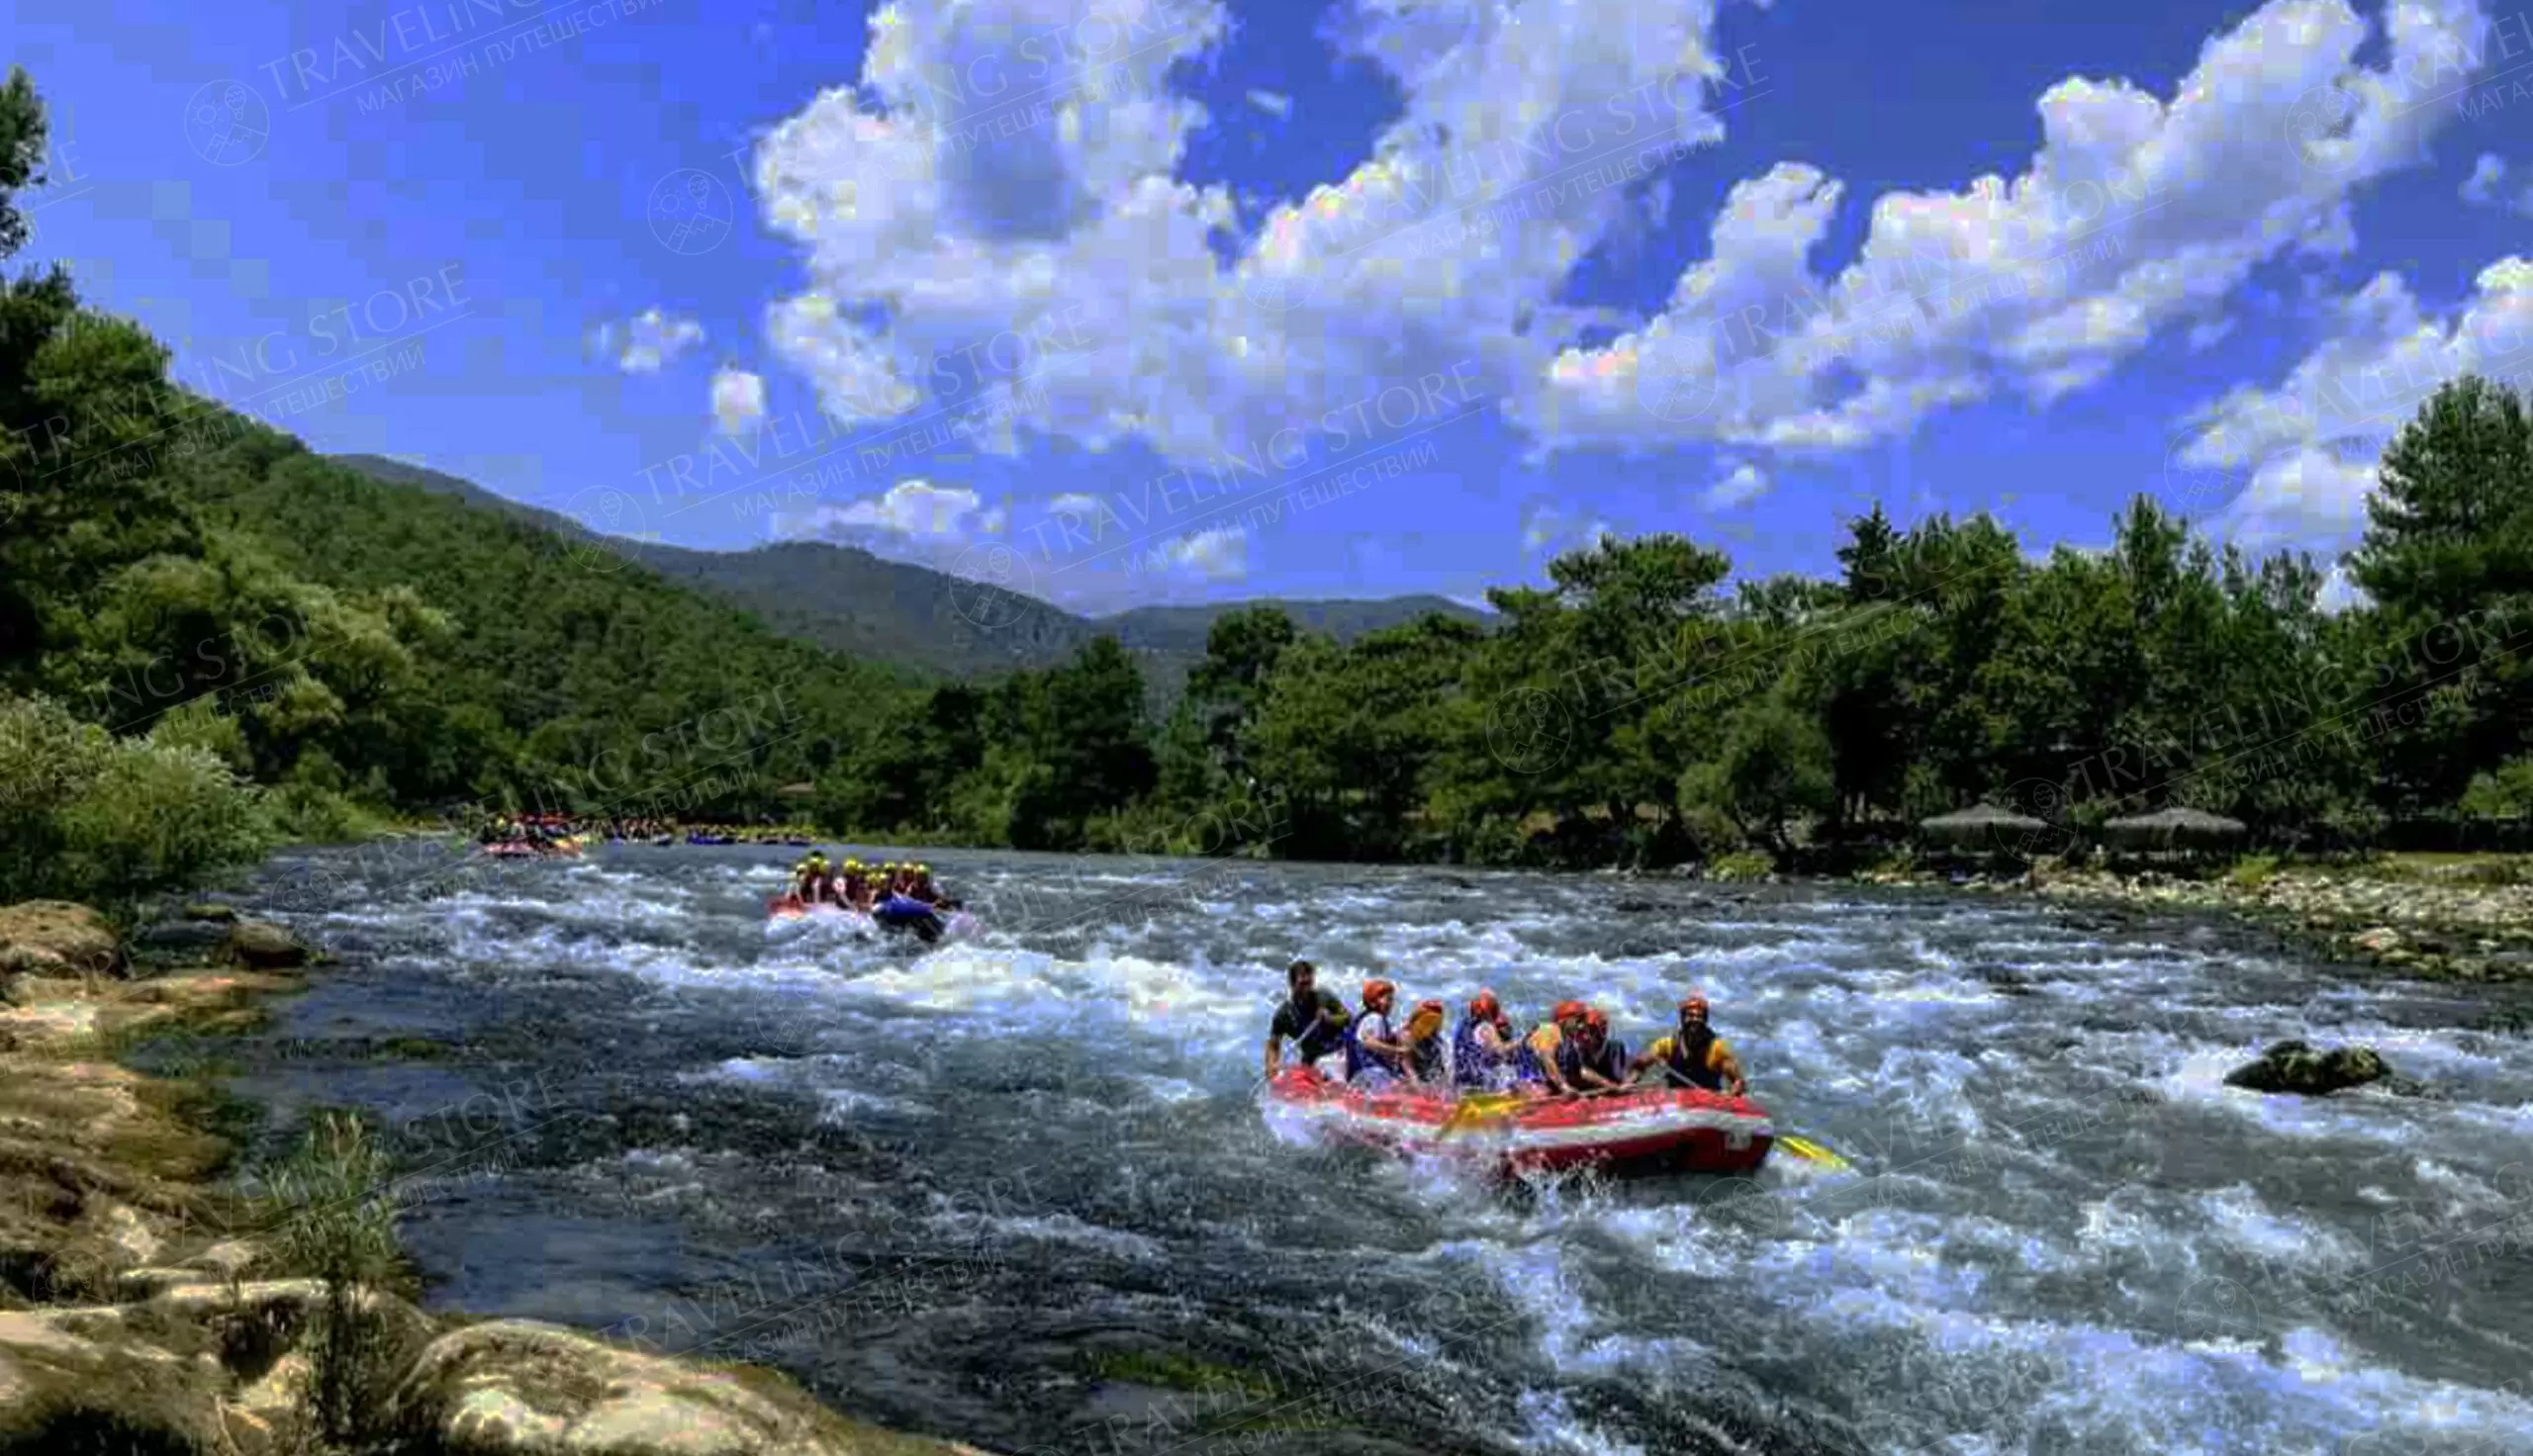 Rafting Tour in Side – Rafting on the Köprüçai River